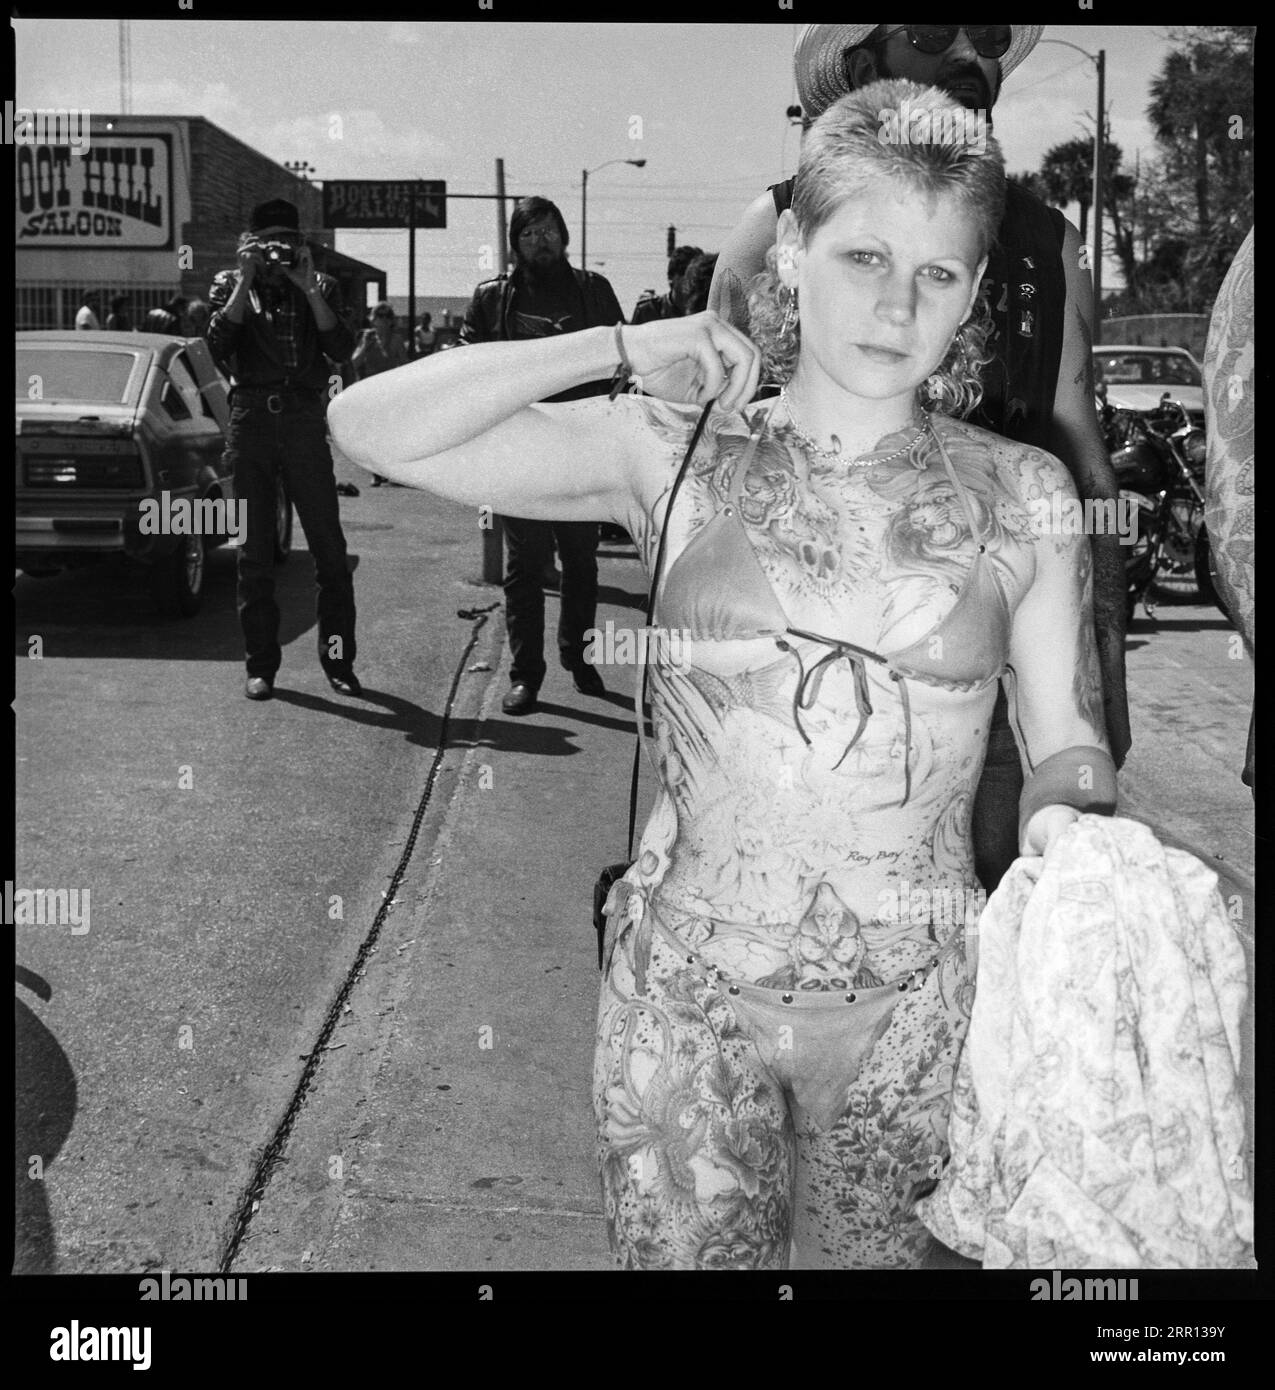 woman displays her full body tattoos walking down the street wearing a bikini during Daytona Bike Week in March 1986 in Daytona Beach, Florida, United States Stock Photo